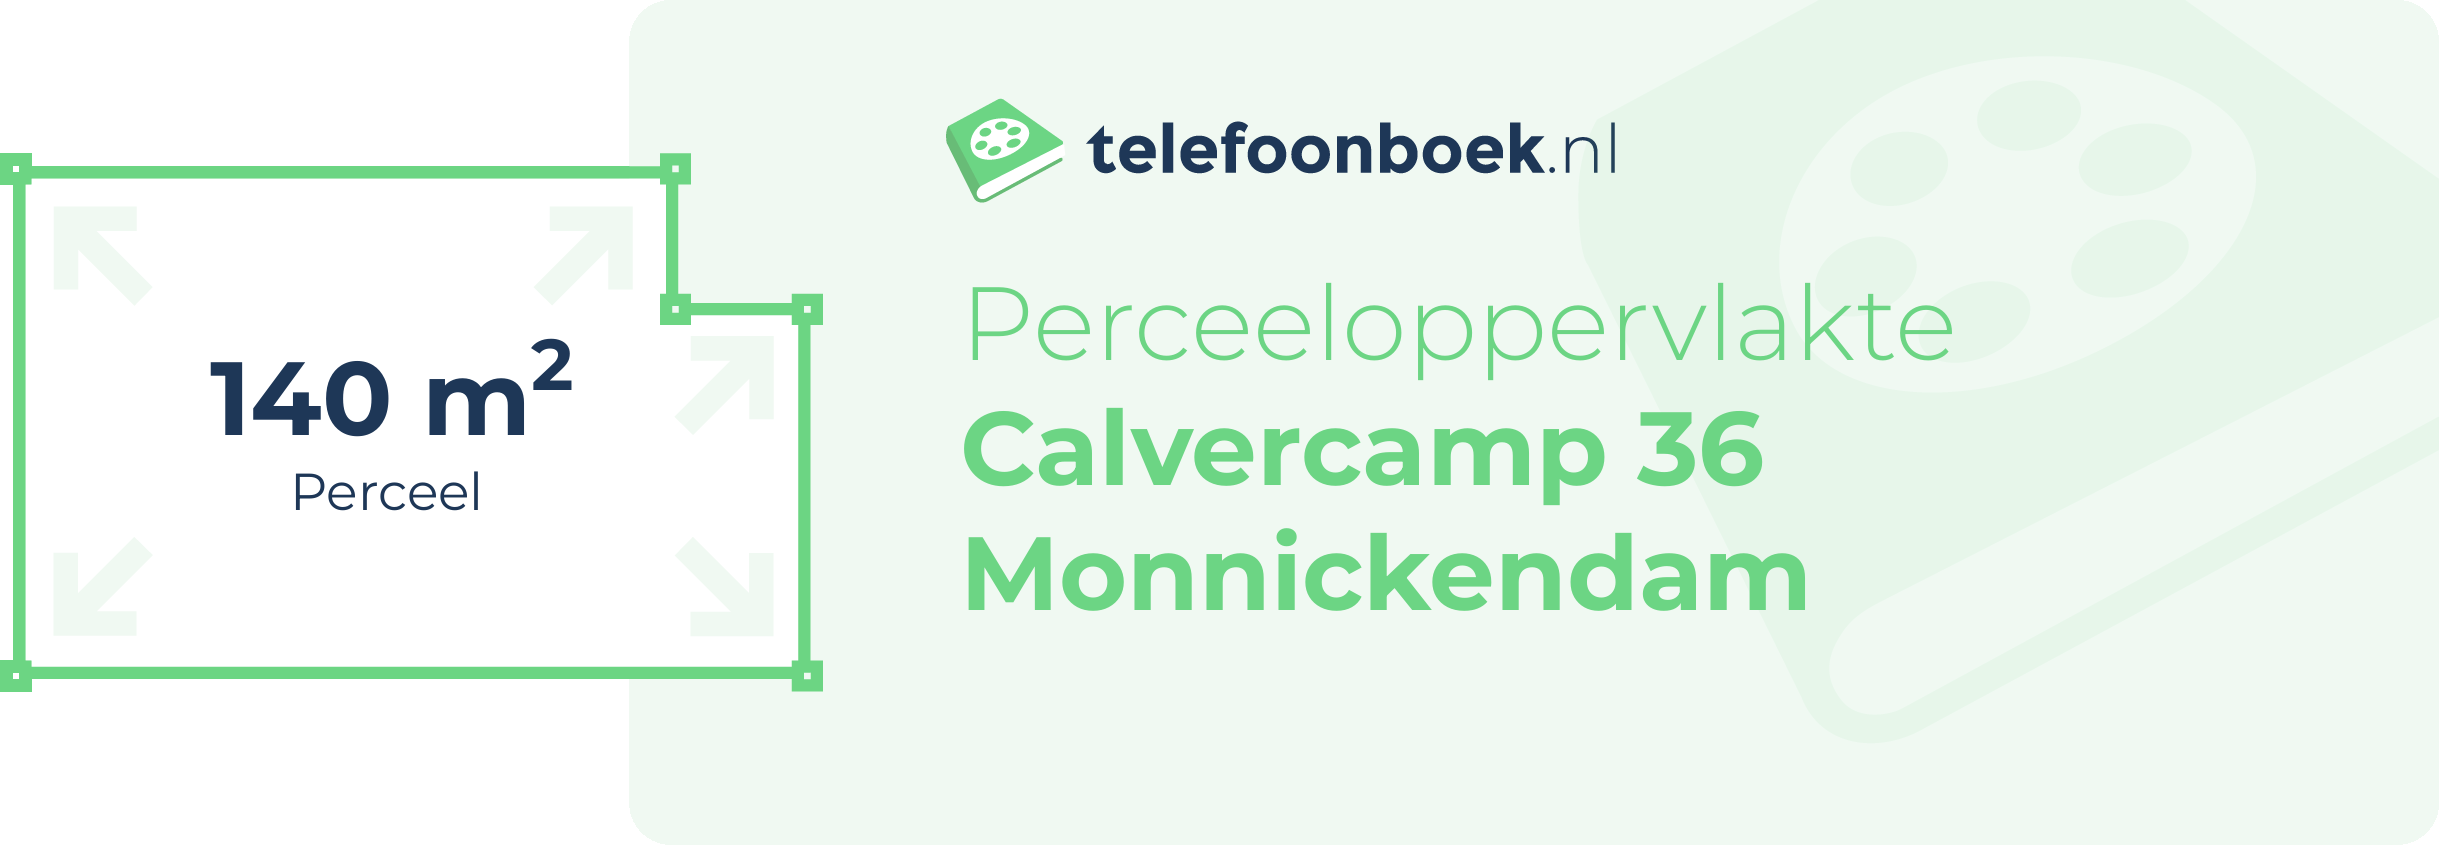 Perceeloppervlakte Calvercamp 36 Monnickendam